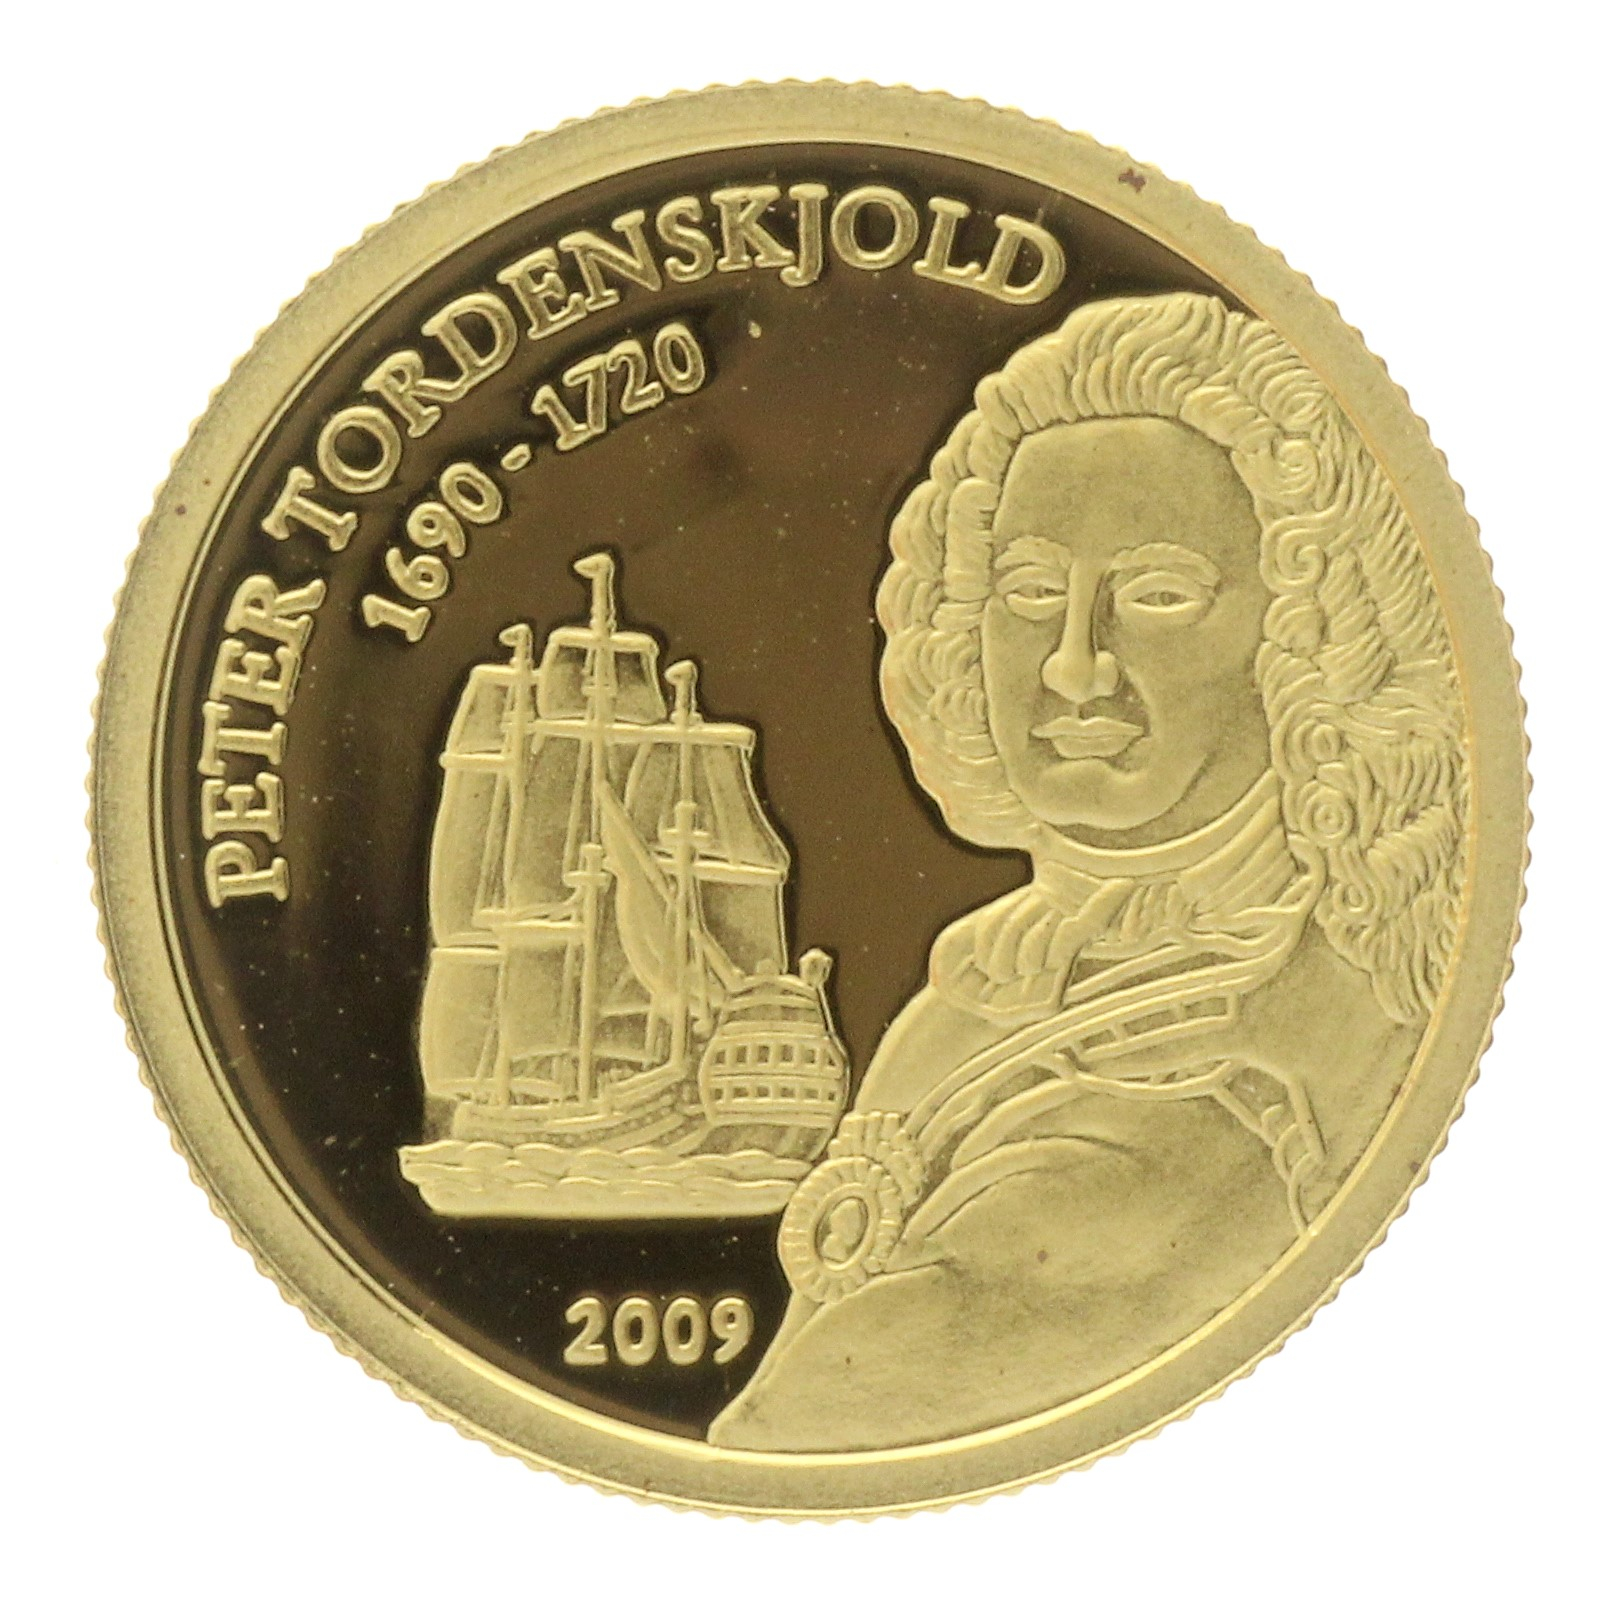 Palau - 1 Dollar - 2009 - Peter Tordenskjold - 1/25oz